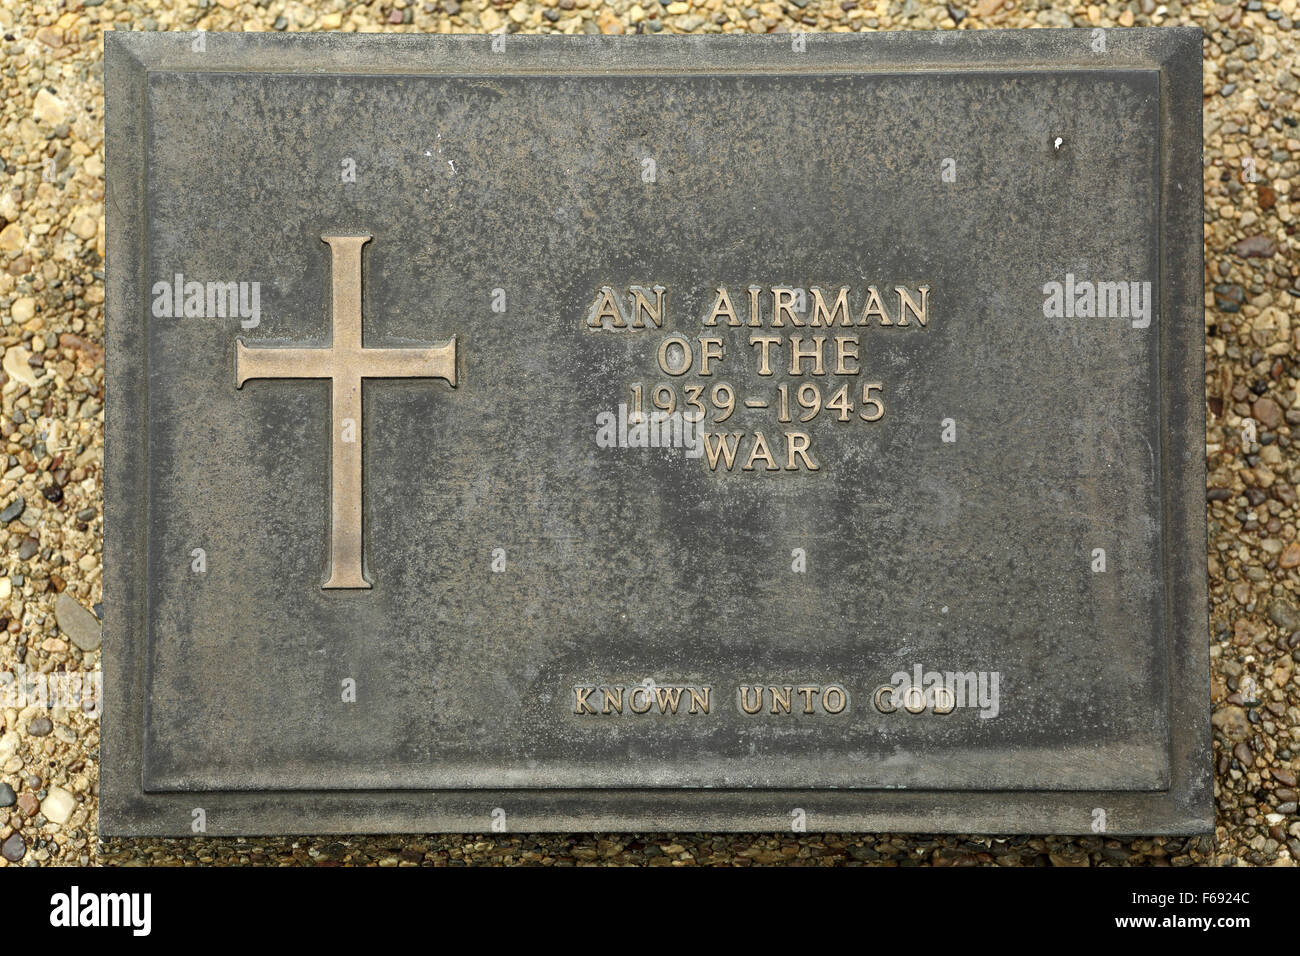 The grave of an unknown airman at Taukkyan War Cemetery near Yangon, Myanmar. Stock Photo